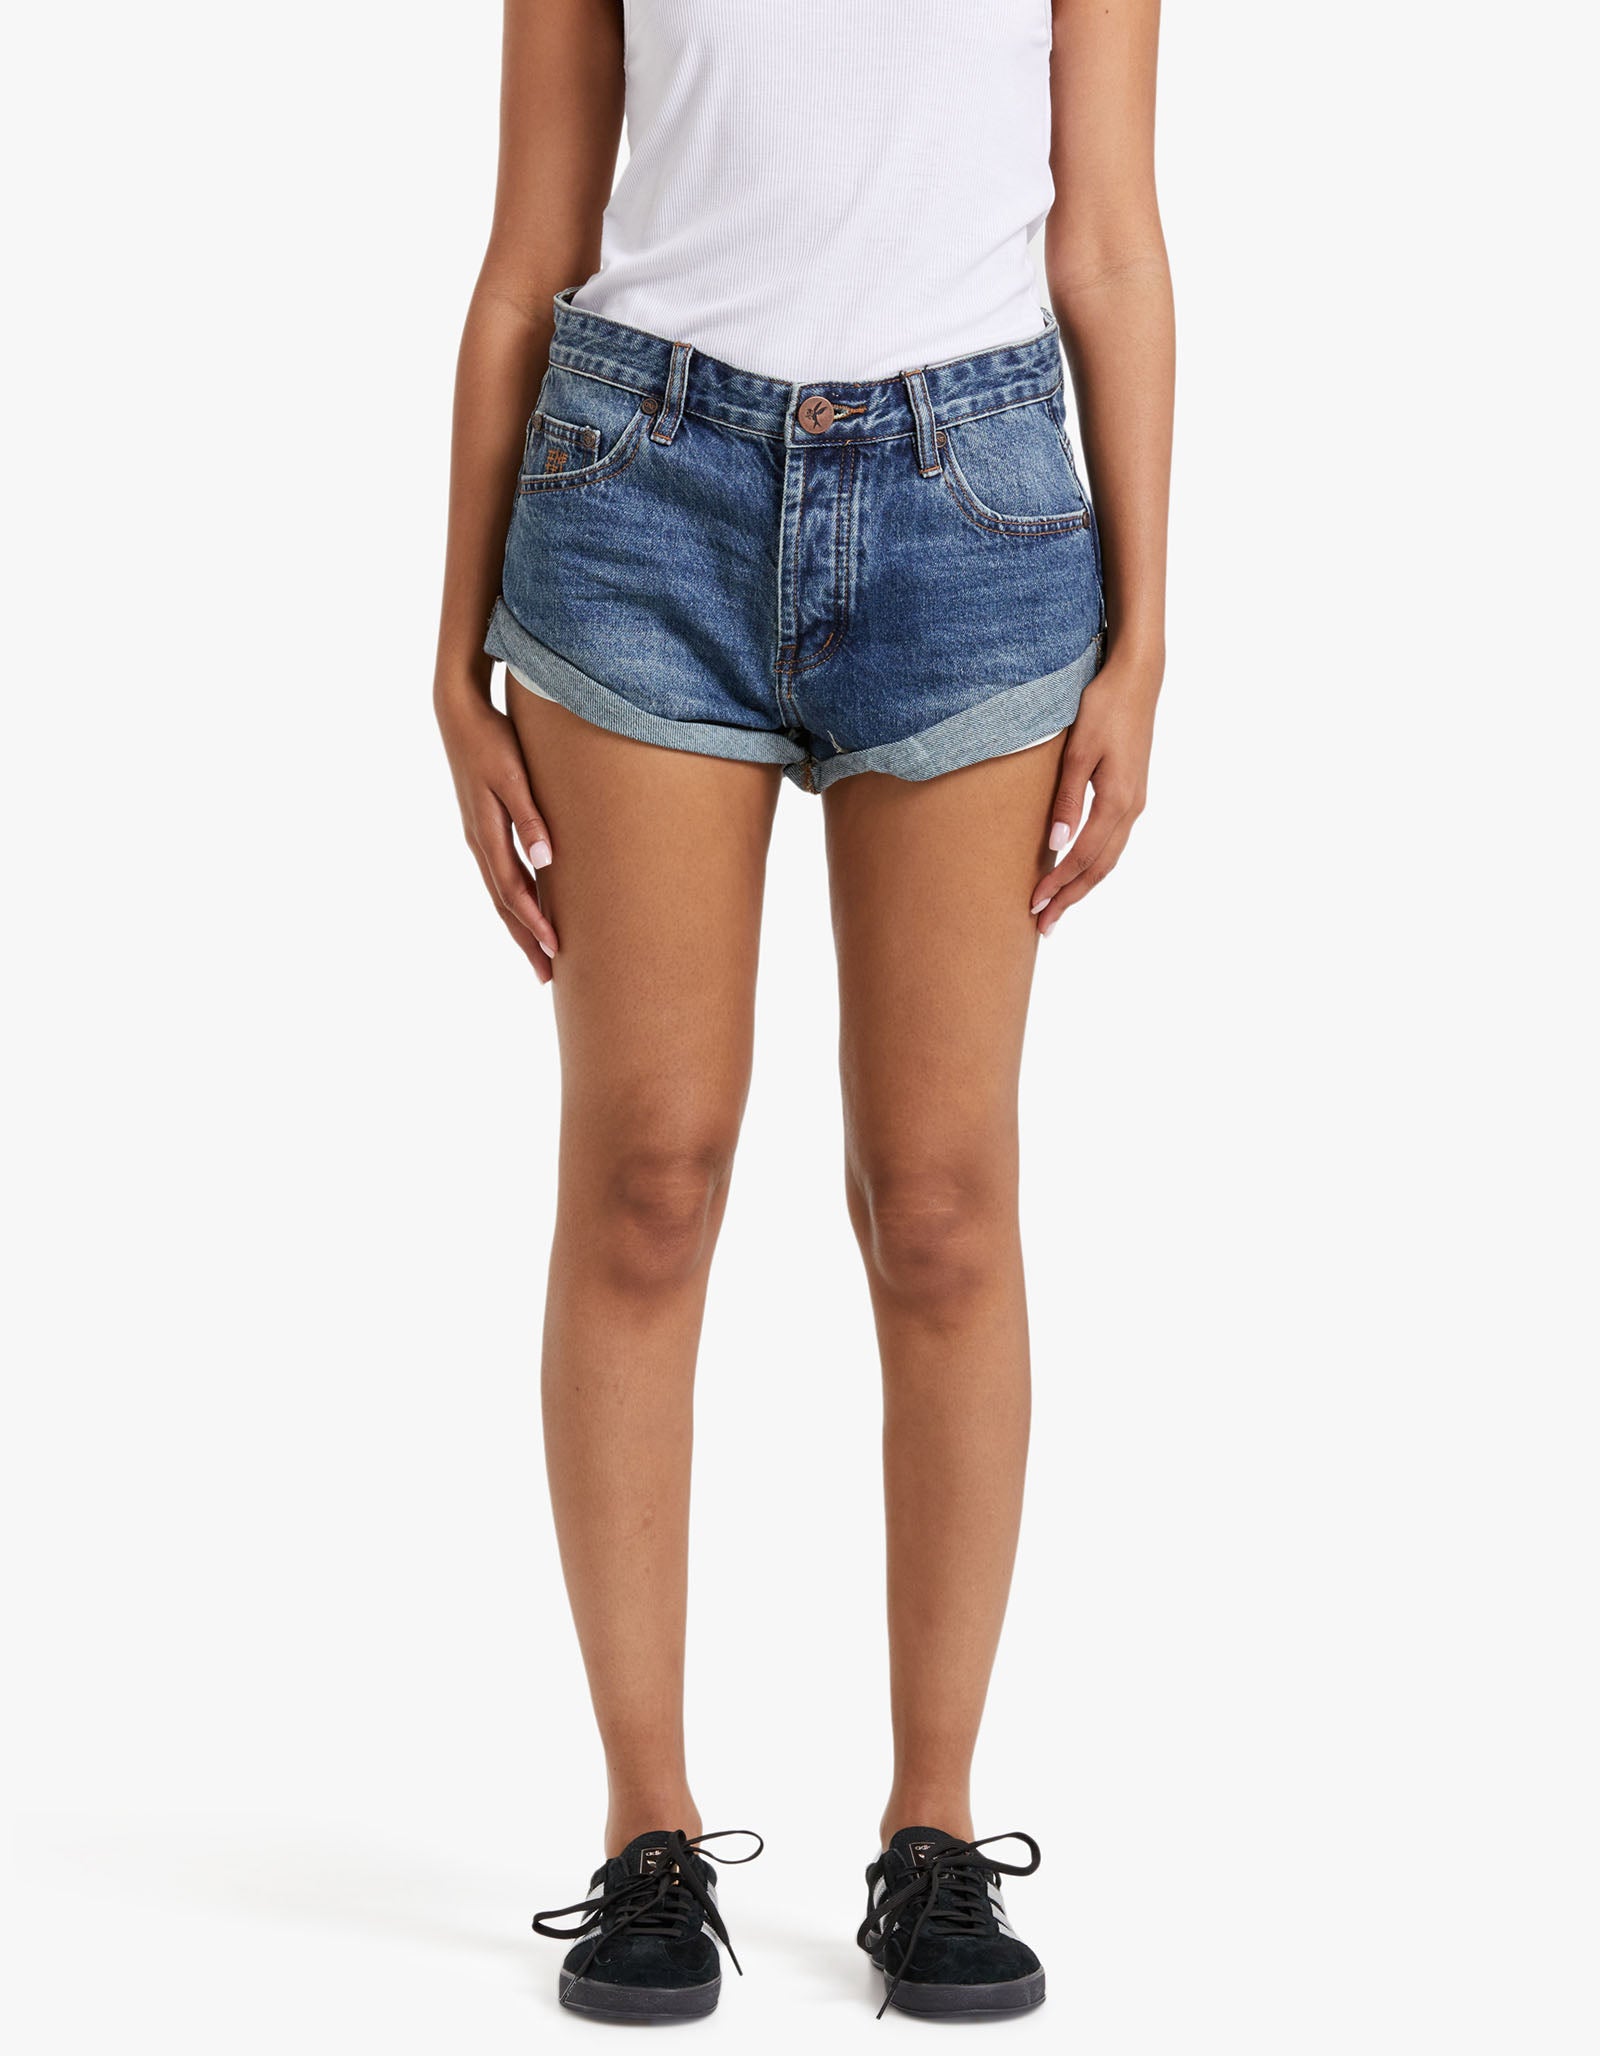 Low Waist Denim Shorts - Dark gray - Ladies | H&M US